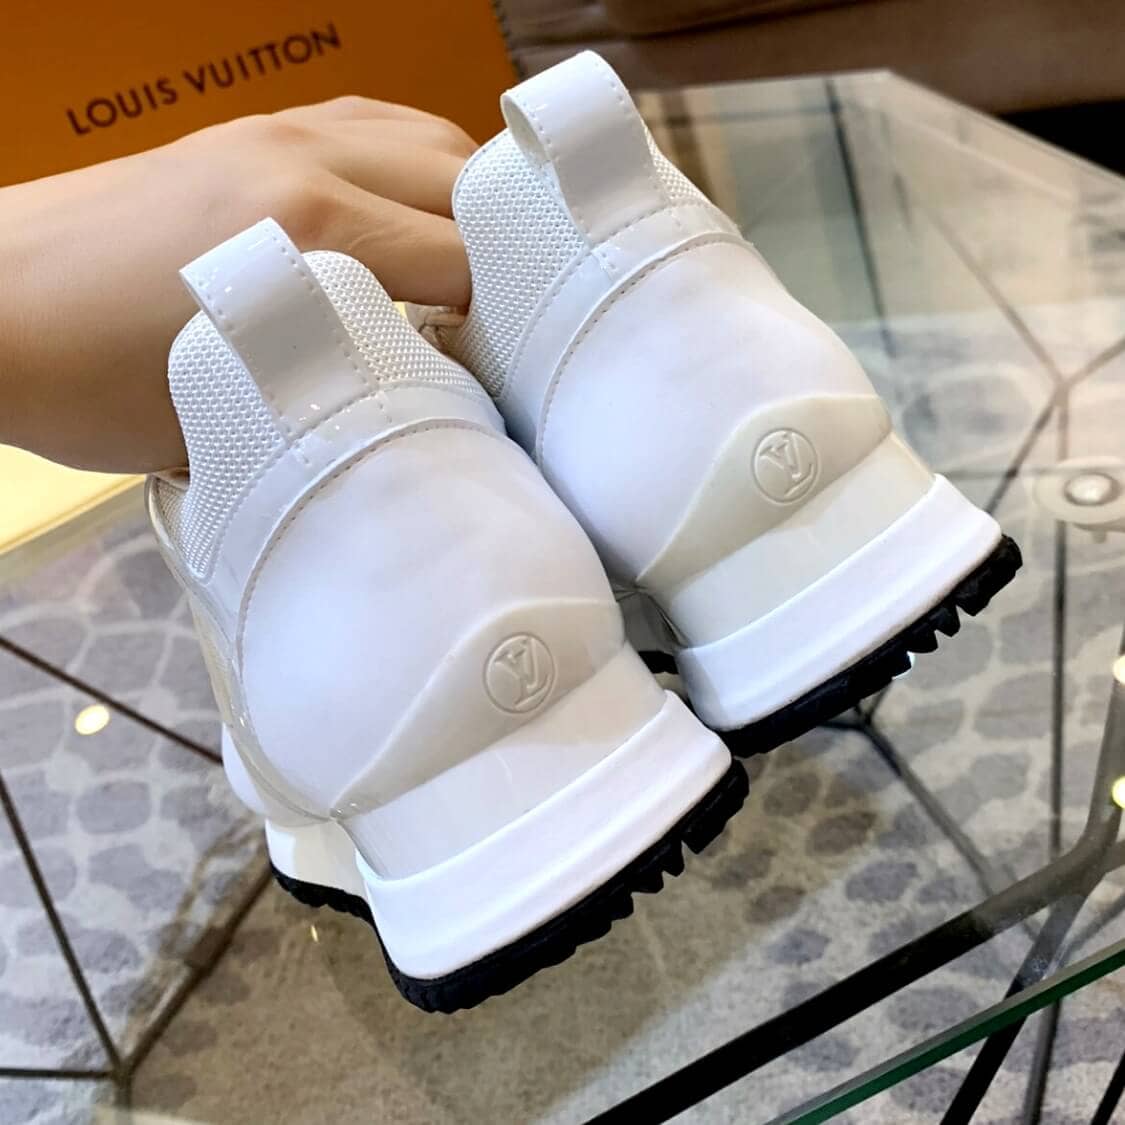 Louis Vuitton Logo Jogging Shoes White